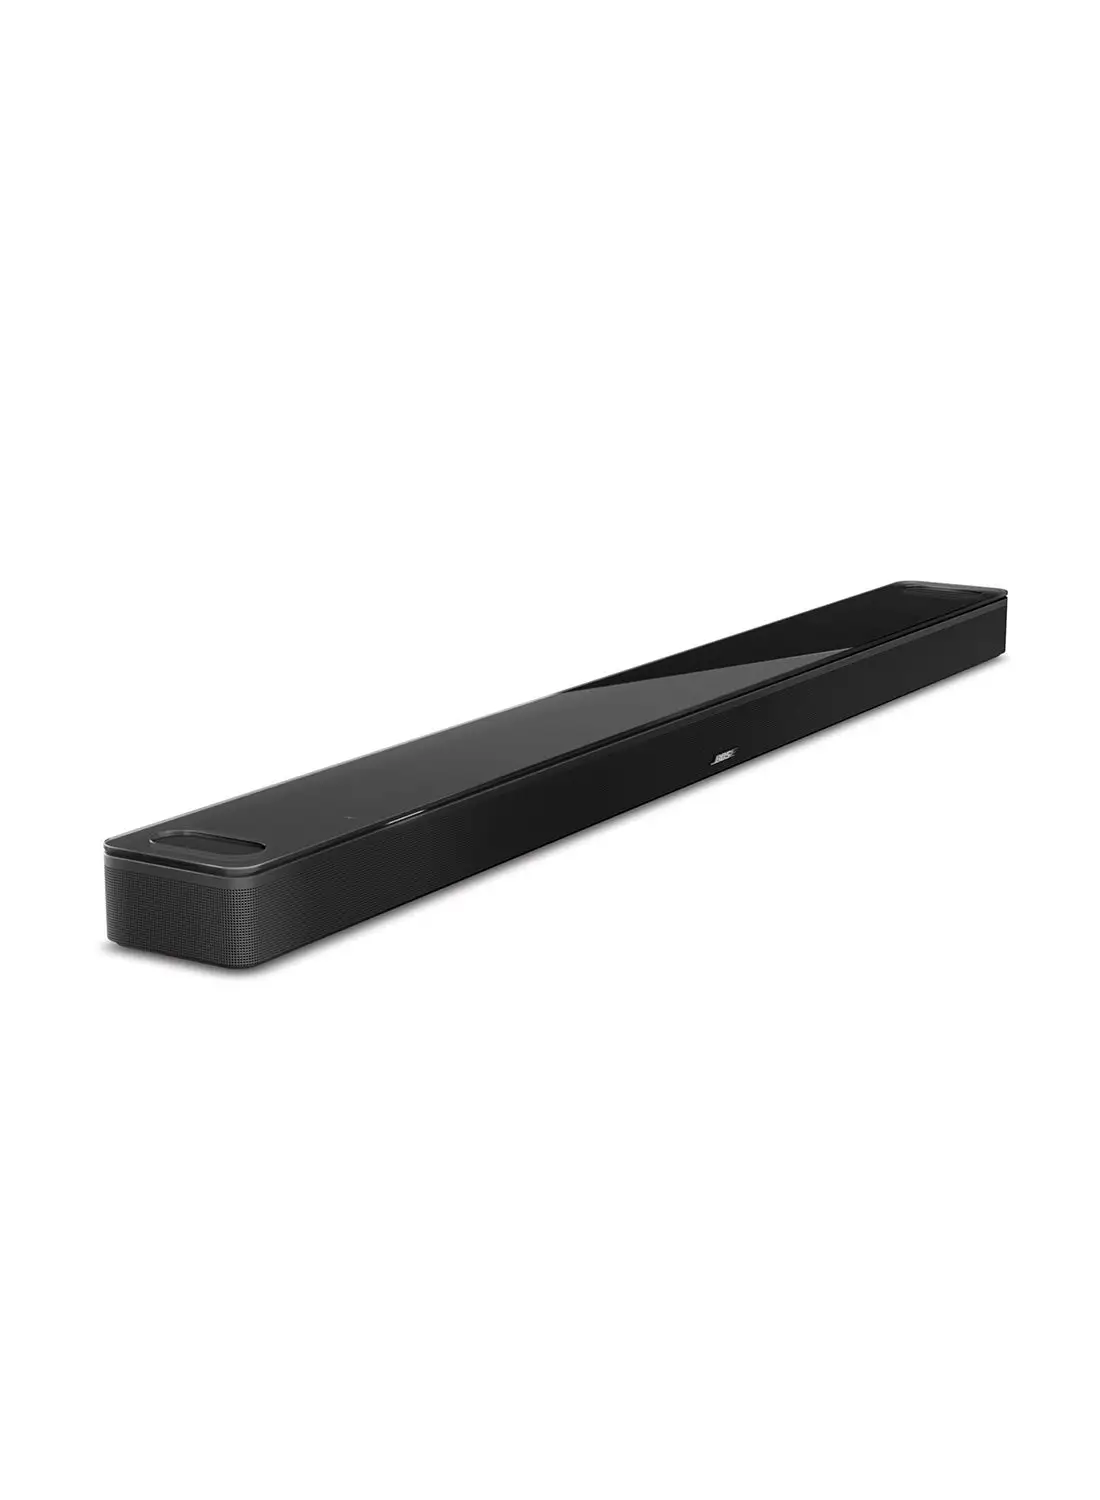 BOSE Bose Smart Ultra Soundbar With Dolby Atmos Plus Alexa and Google Voice Control, Surround Sound System for TV, Black 882963-4100 Black